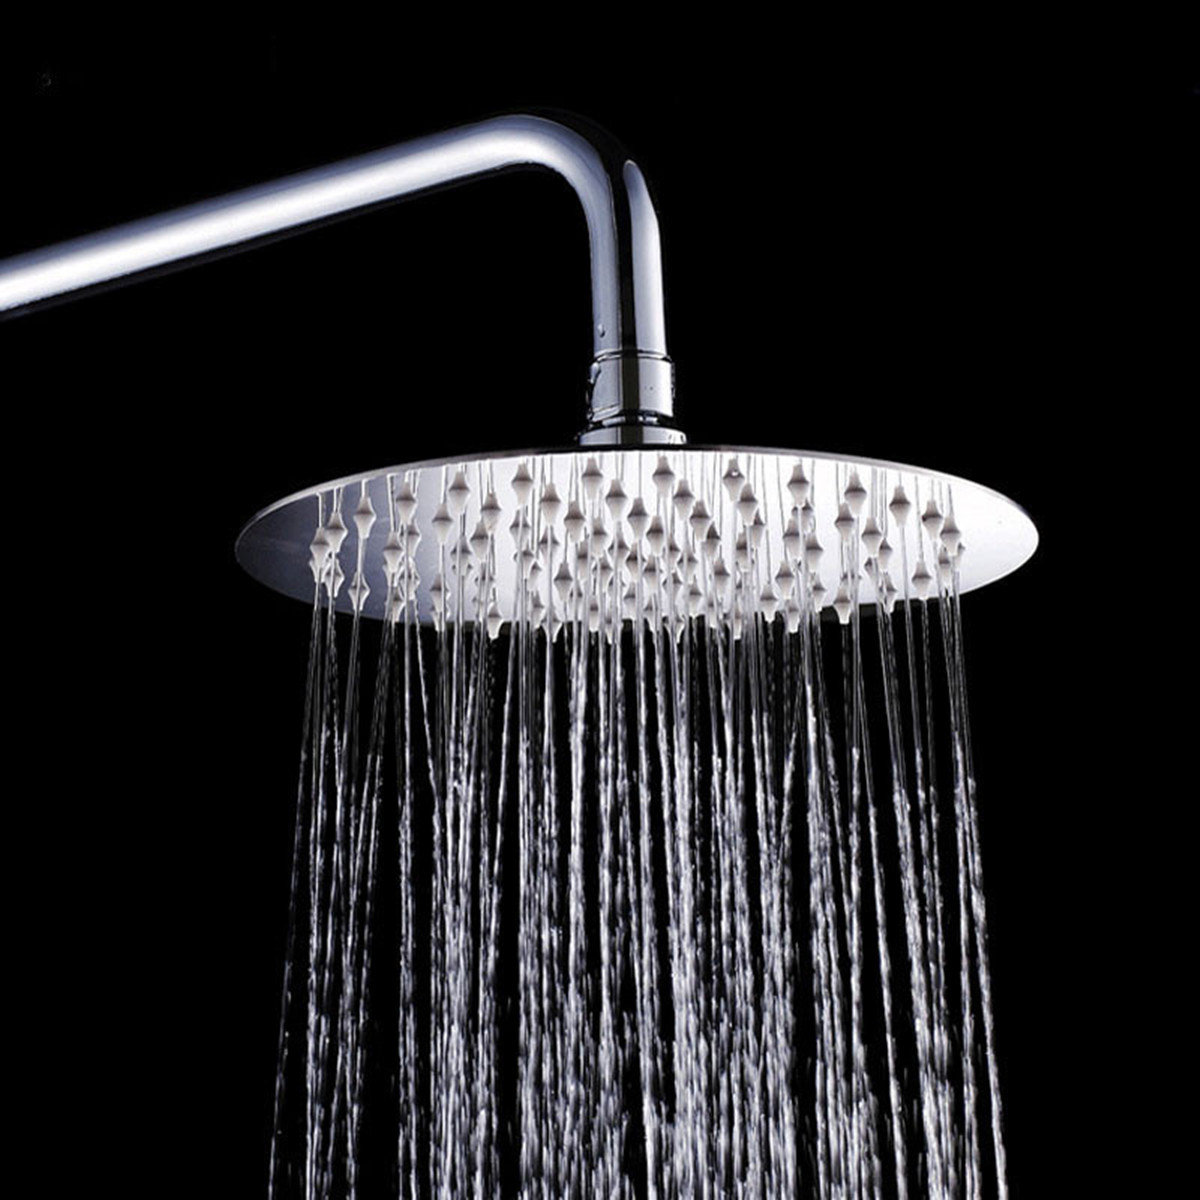 

6 Inch Stainless Steel Rainfall Shower Head Bathroom Round Pressure Showerhead